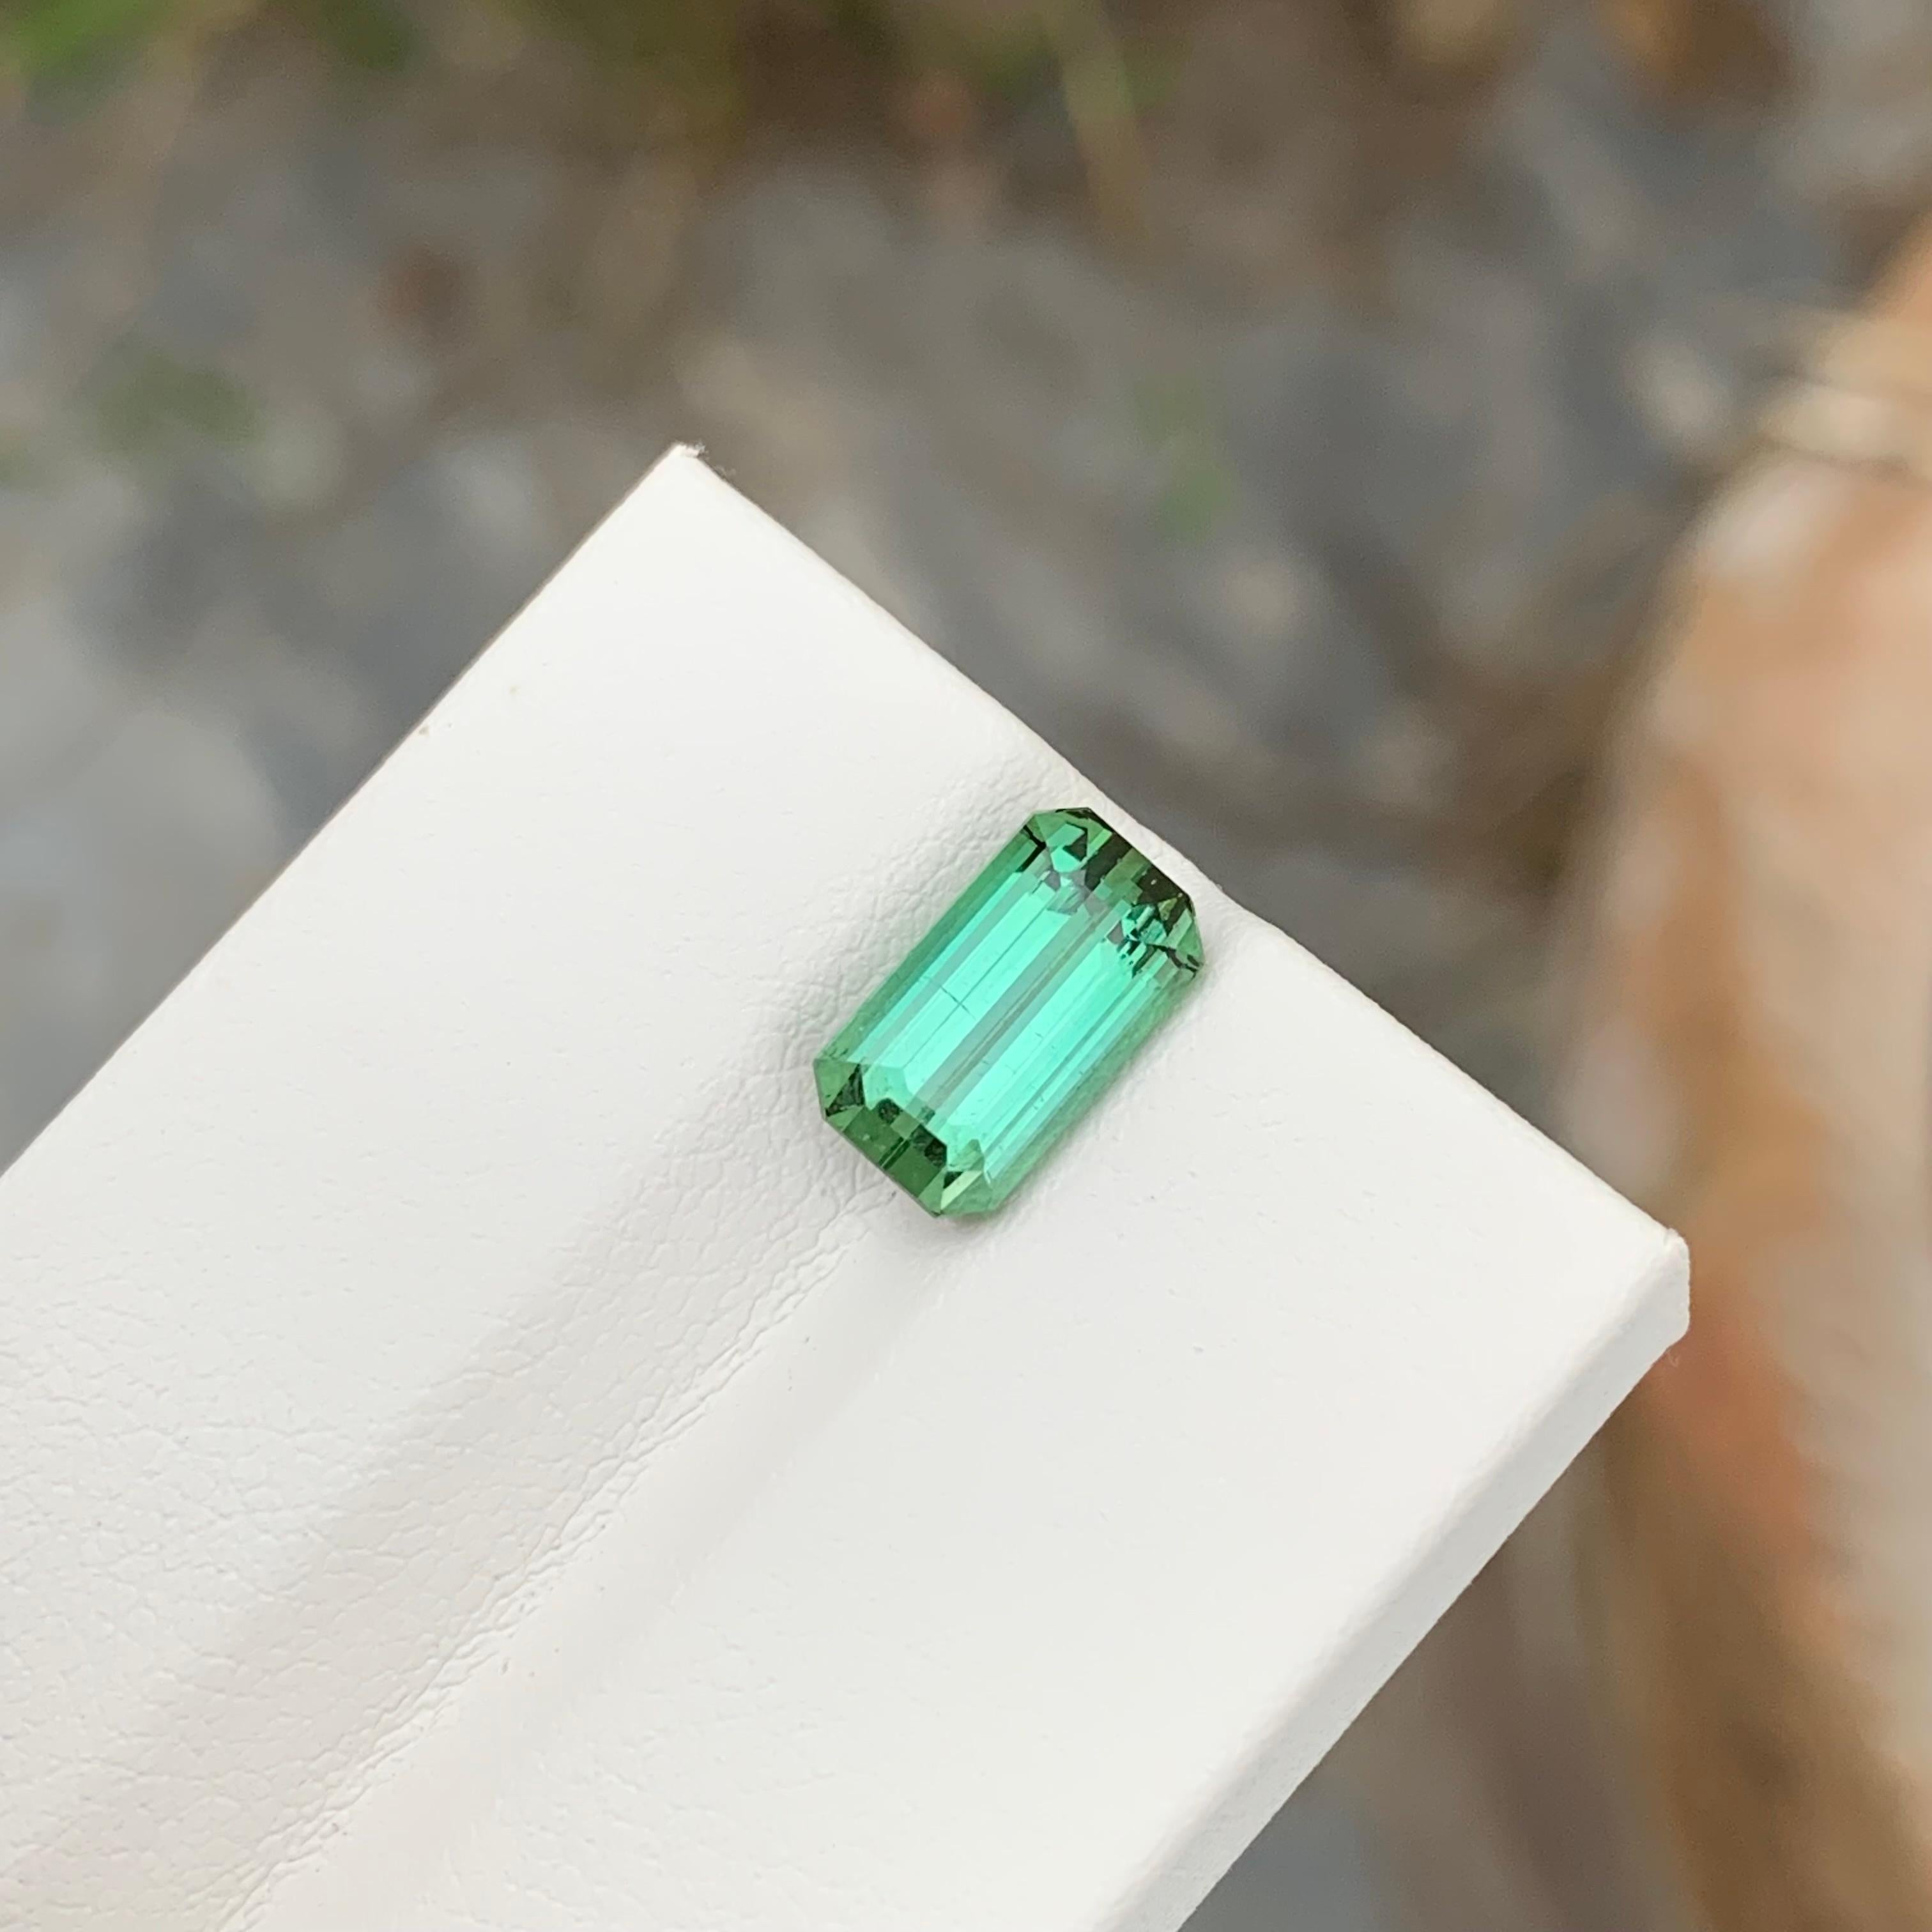 Stunning 3.15 Carats Natural Loose Mint Green Tourmaline Emerald Shape For Sale 1